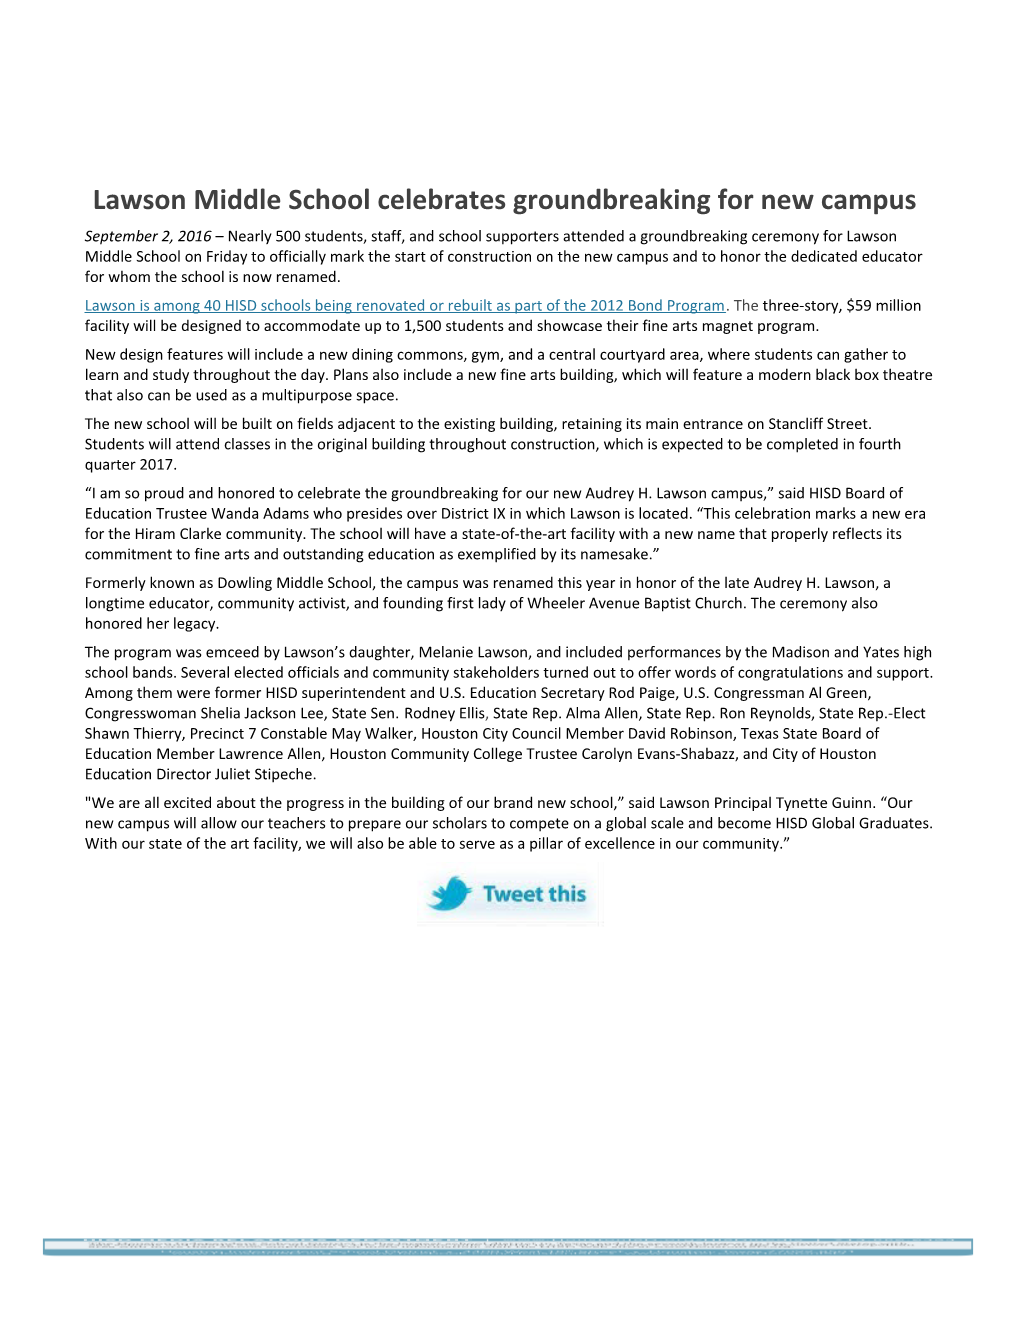 Lawson Middle School Celebratesgroundbreaking for New Campus